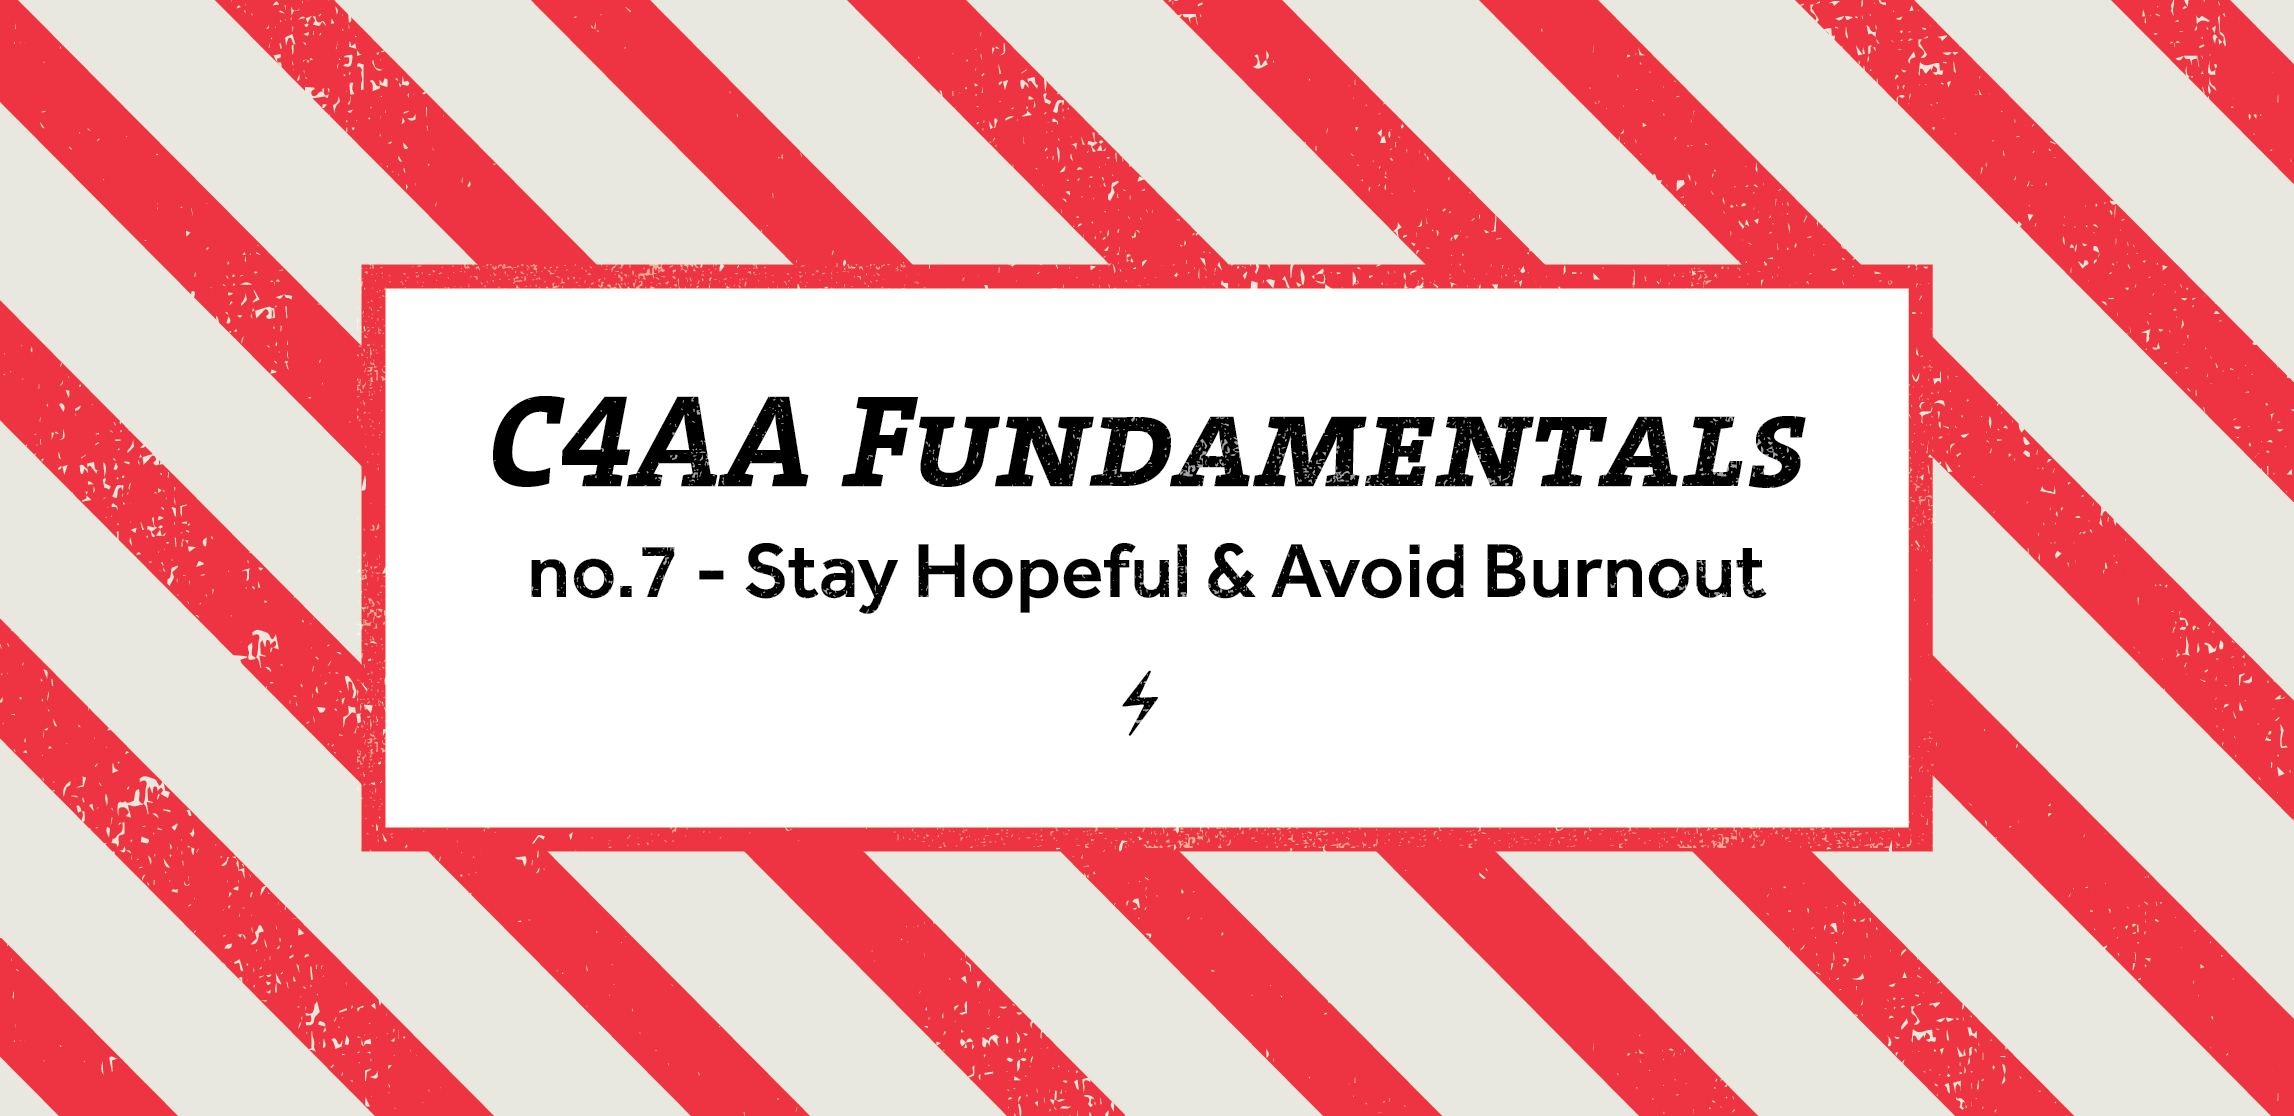 C4AA Fundamentals #7: Stay Hopeful & Avoid Burnout